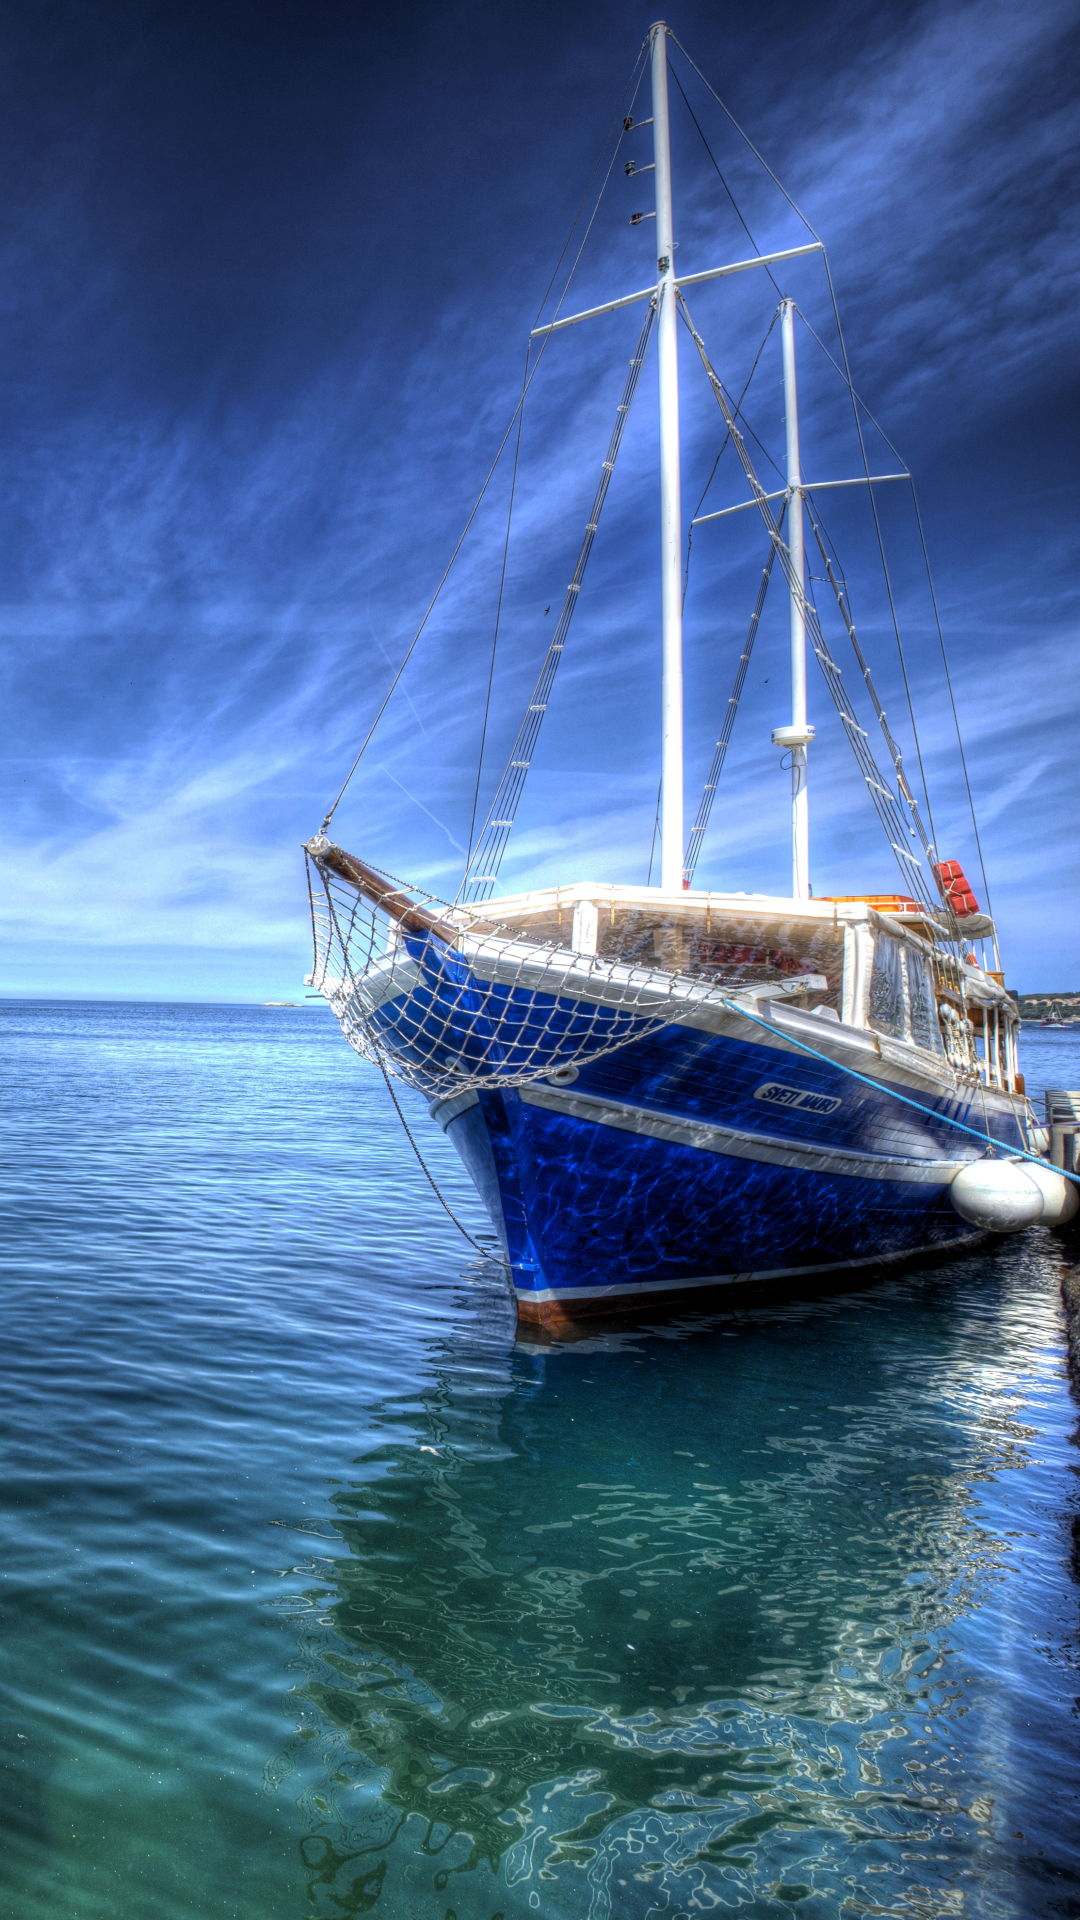 Boat on the Adriatic Sea in Croatia